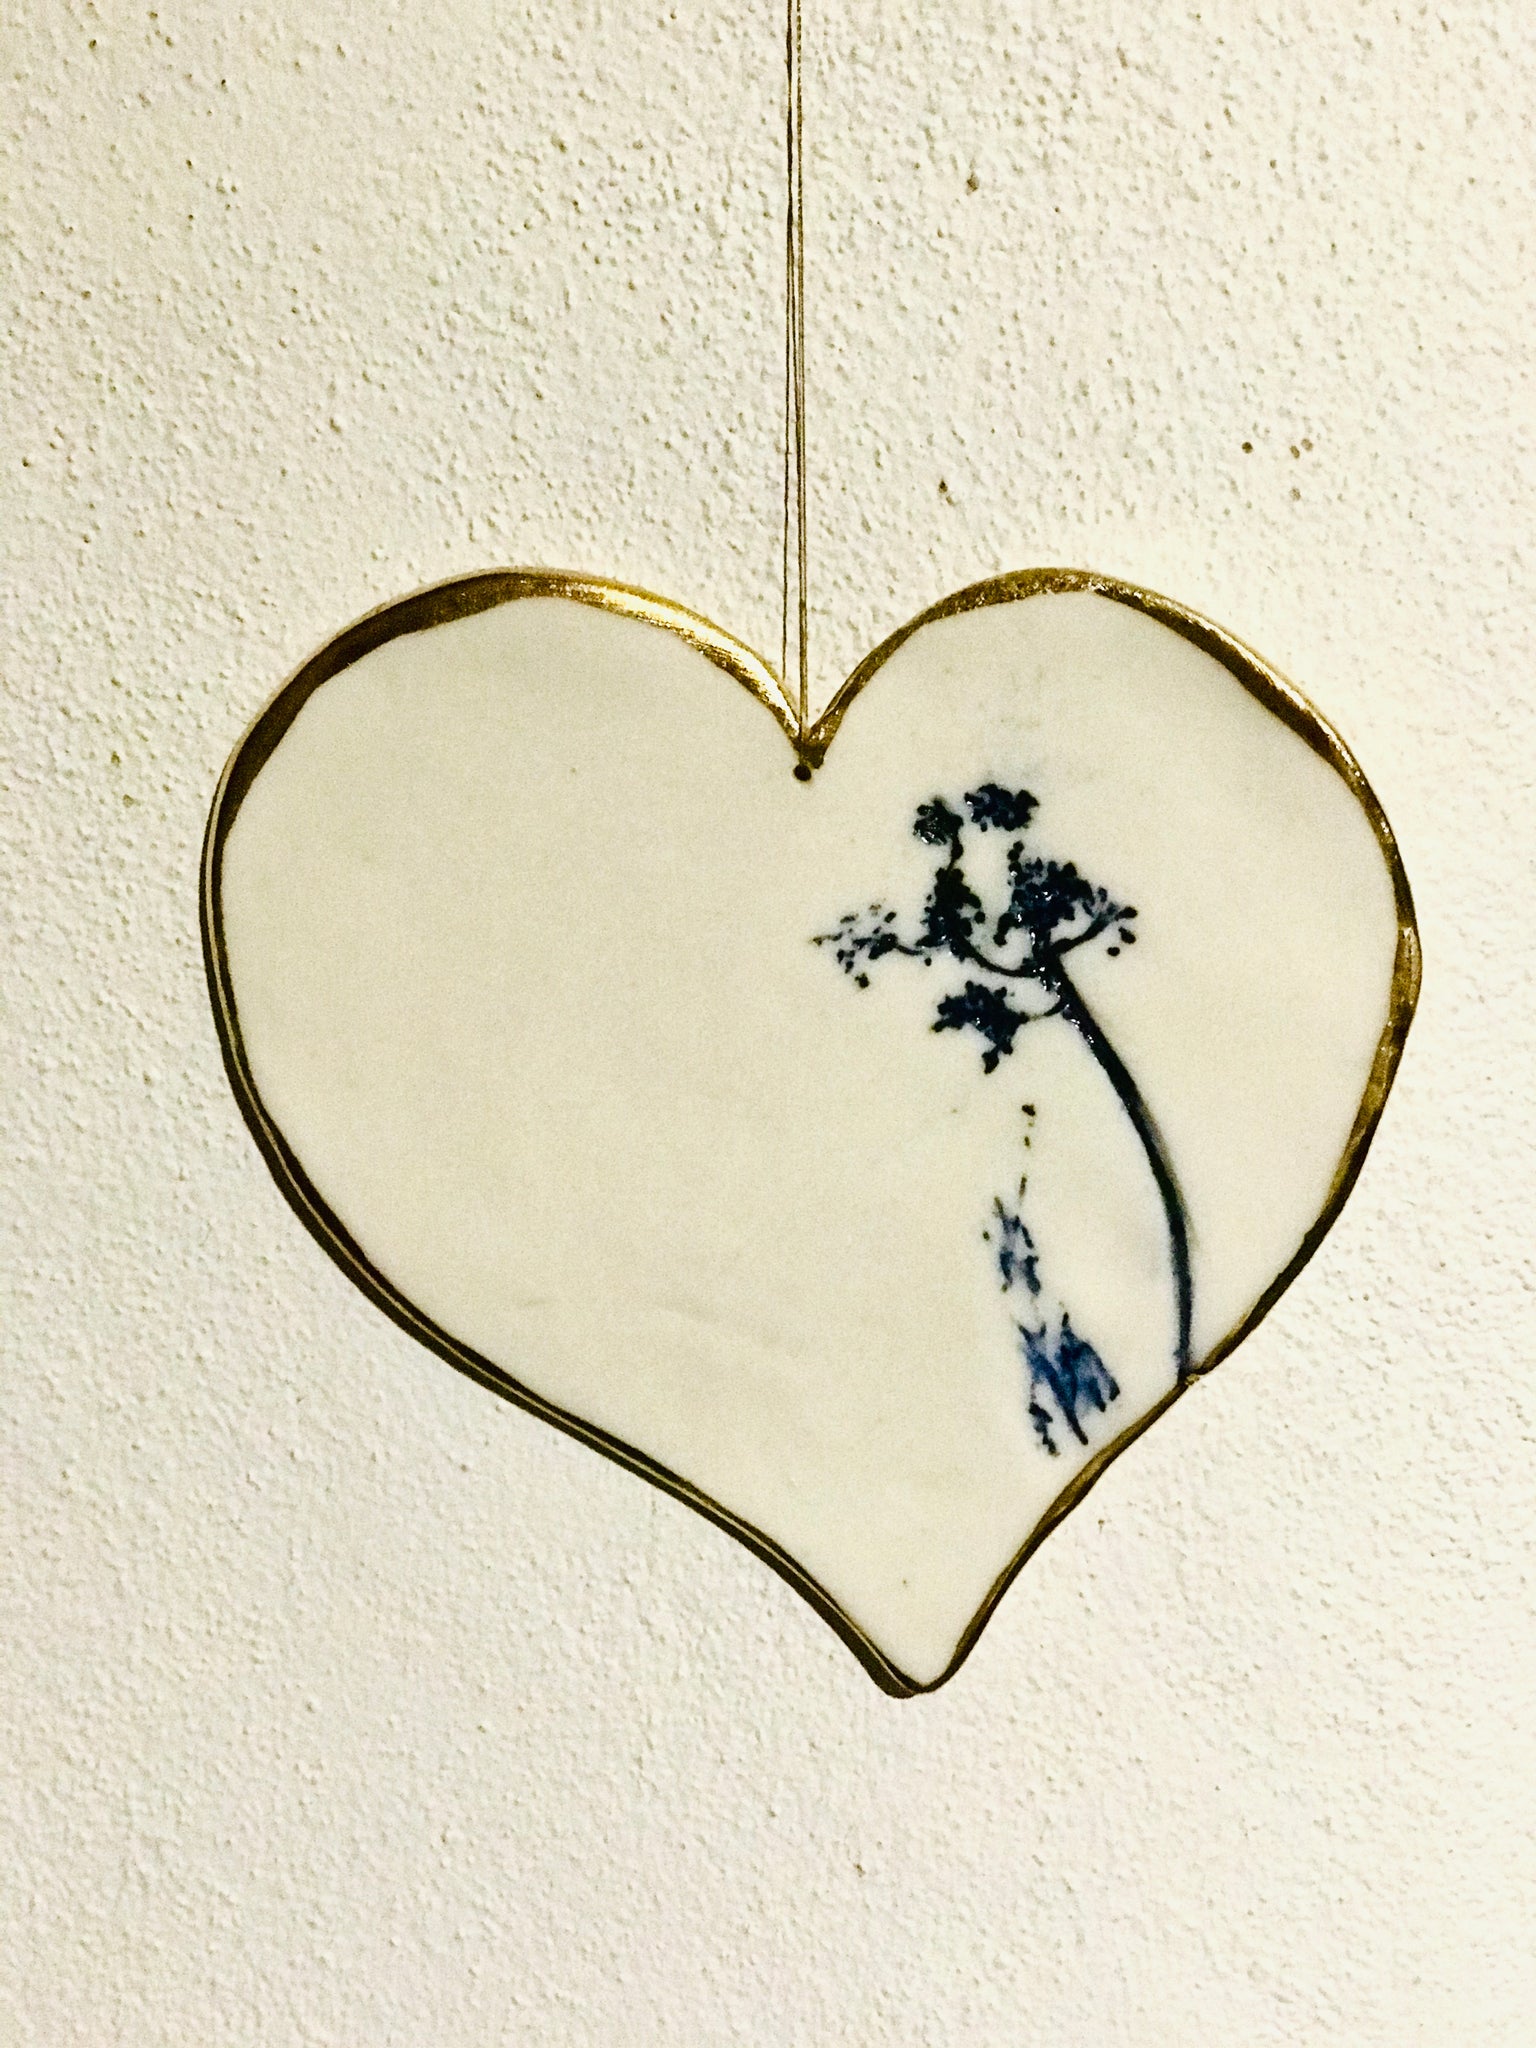 Decorative hanging heart